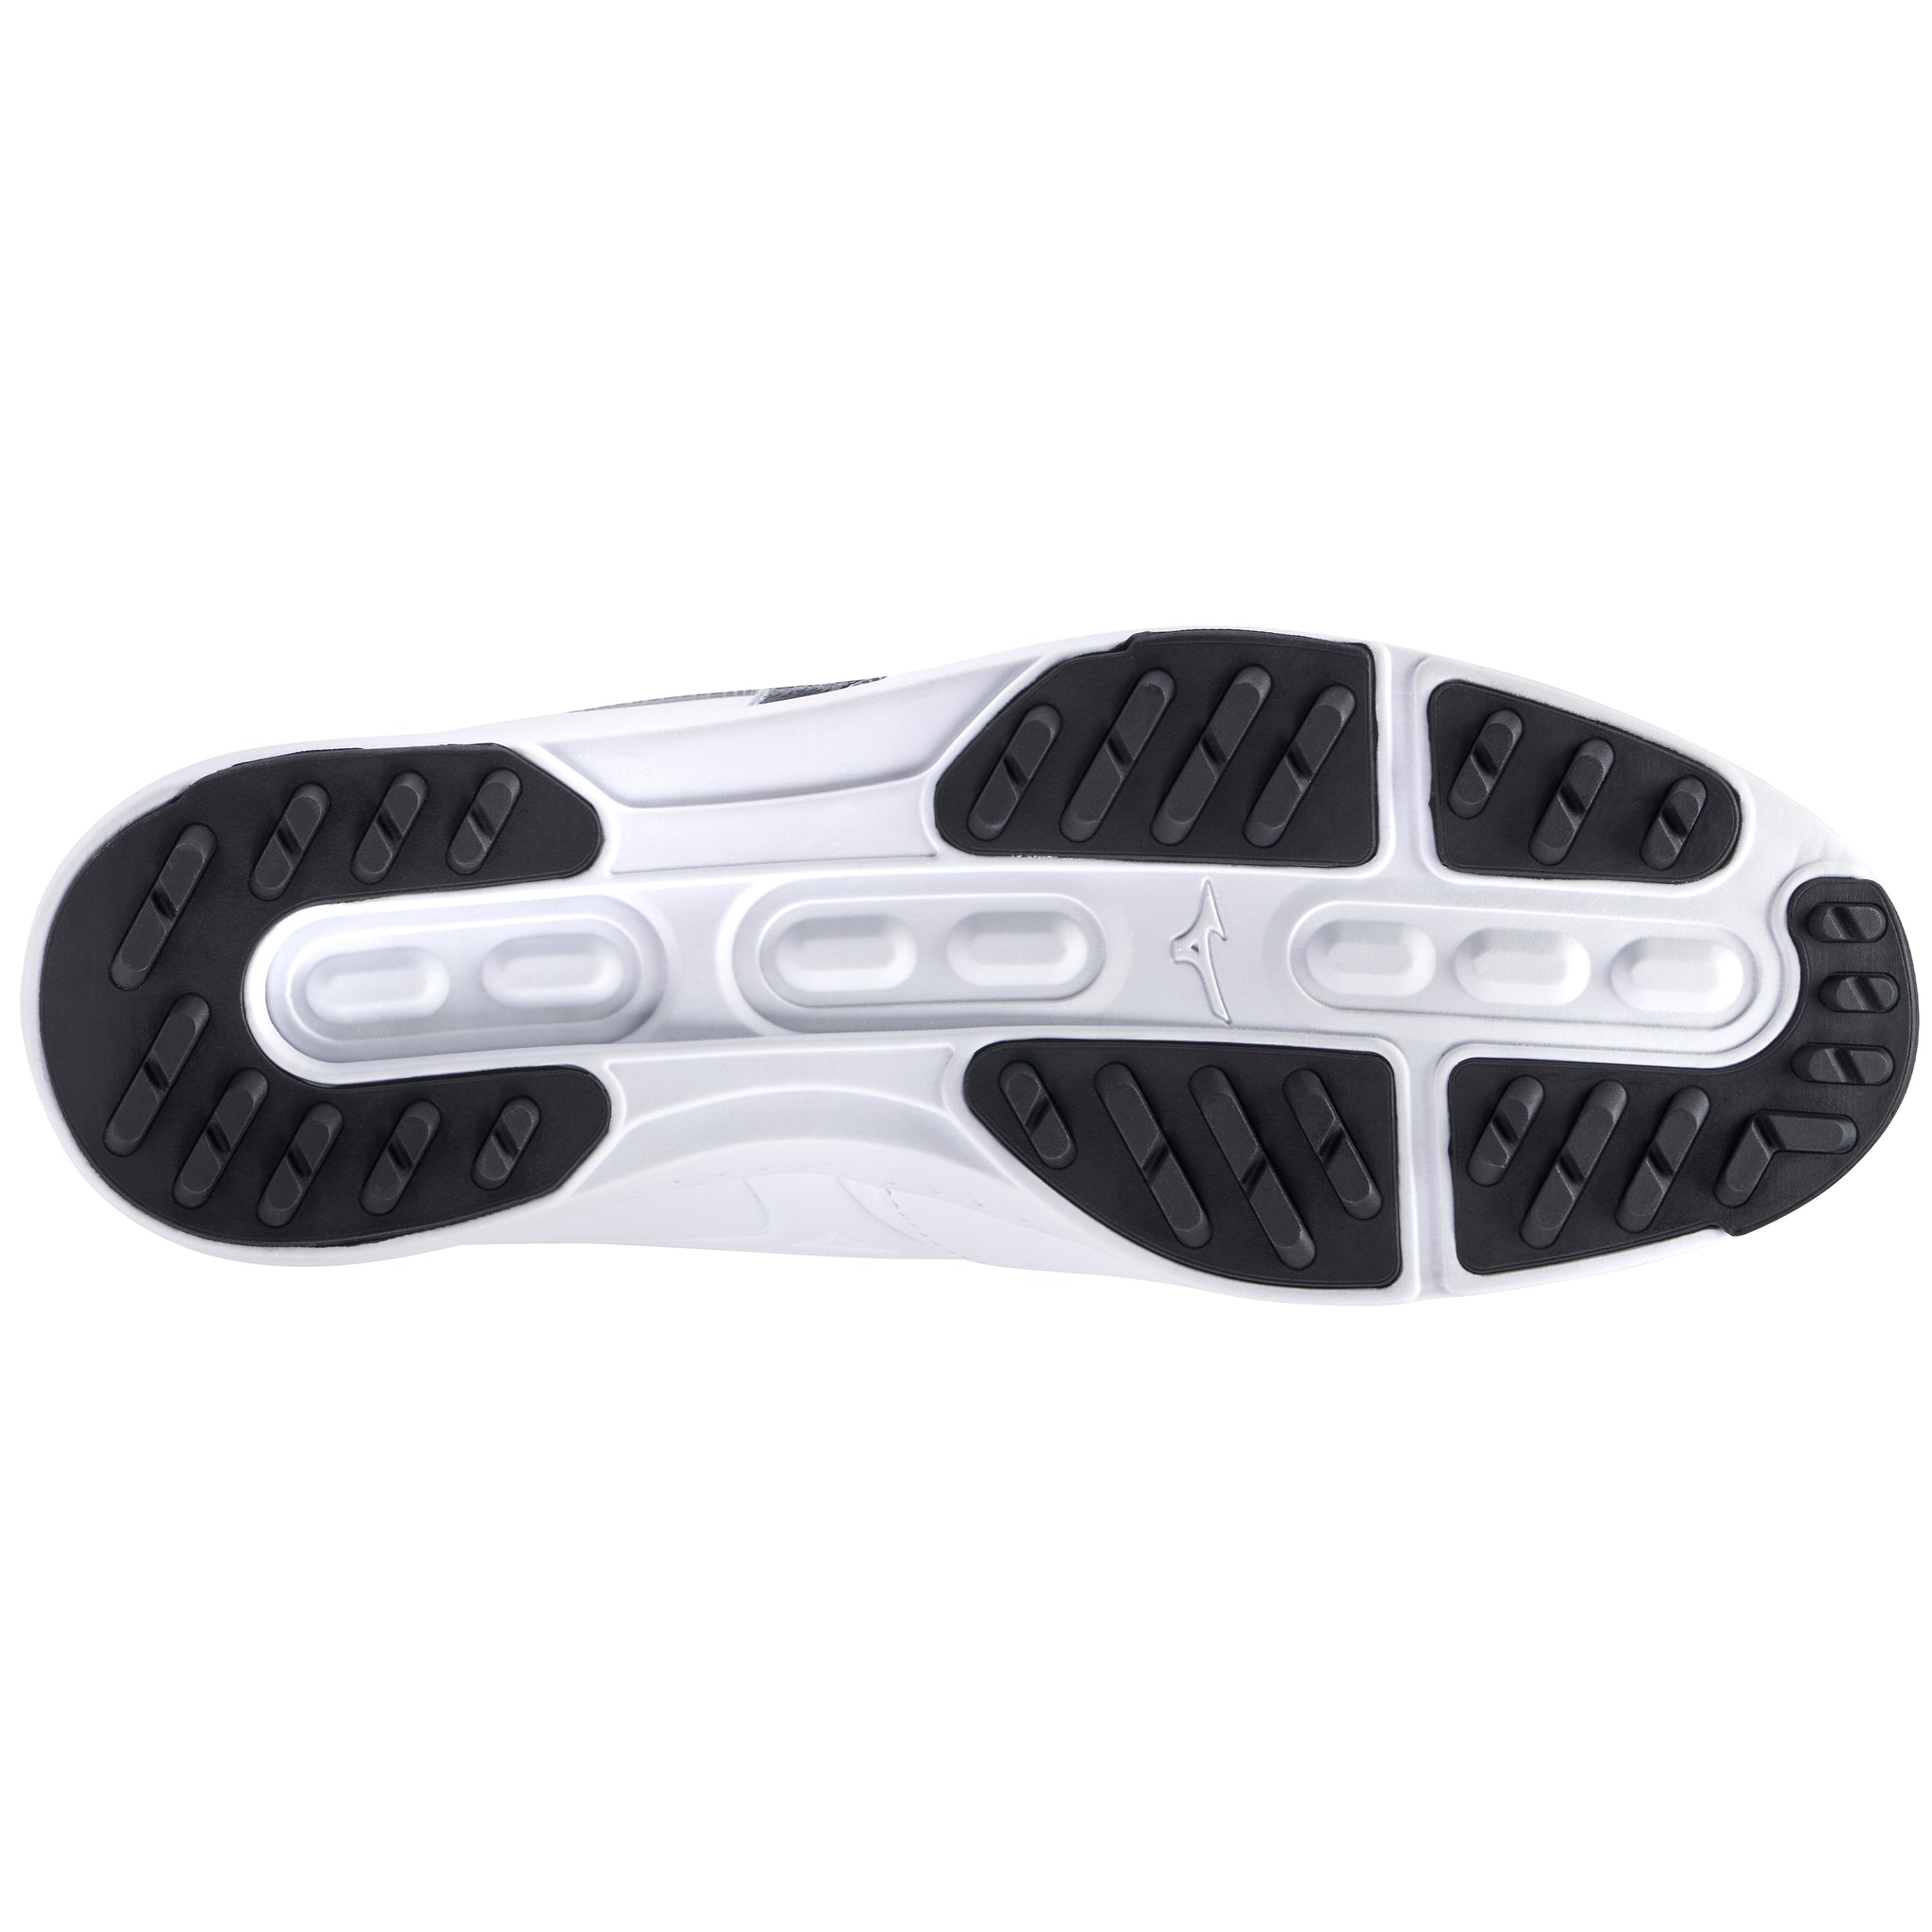 mizuno-nexlite-gs-spikeless-boa-golf-shoes-51gm2155-white-silver-01